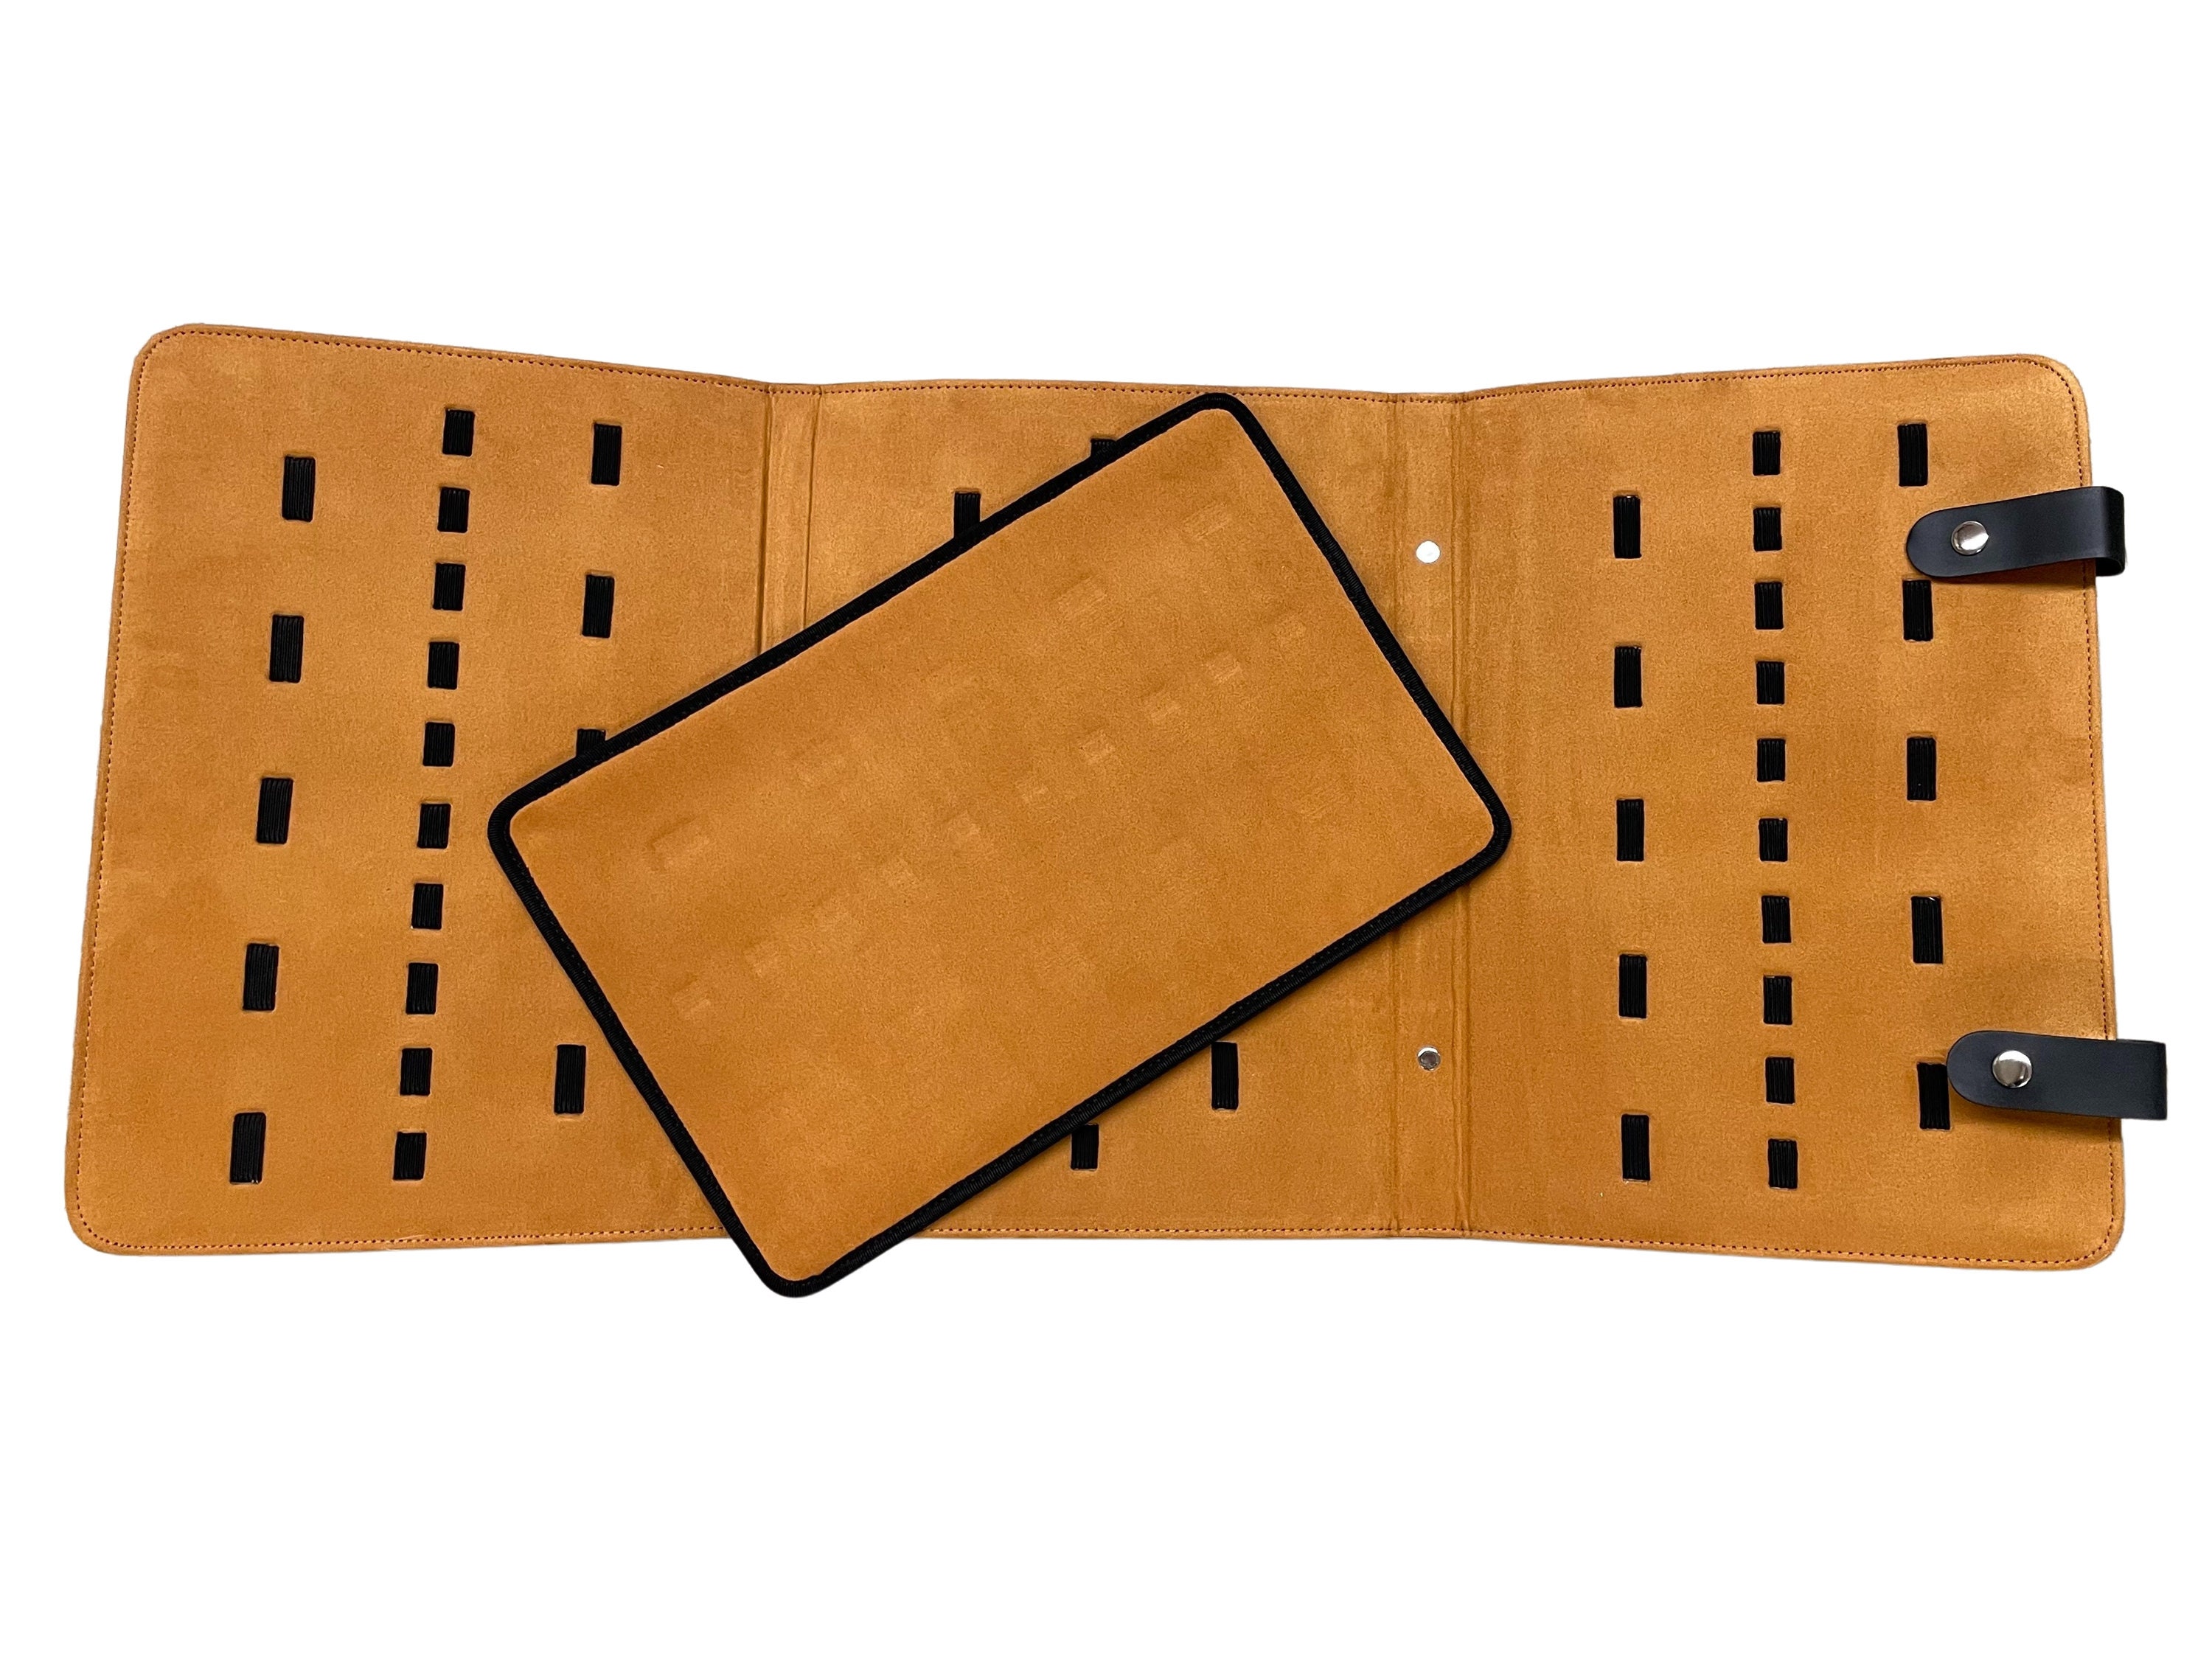 Michiko Genuine Leather Scissor Case Dark Brown